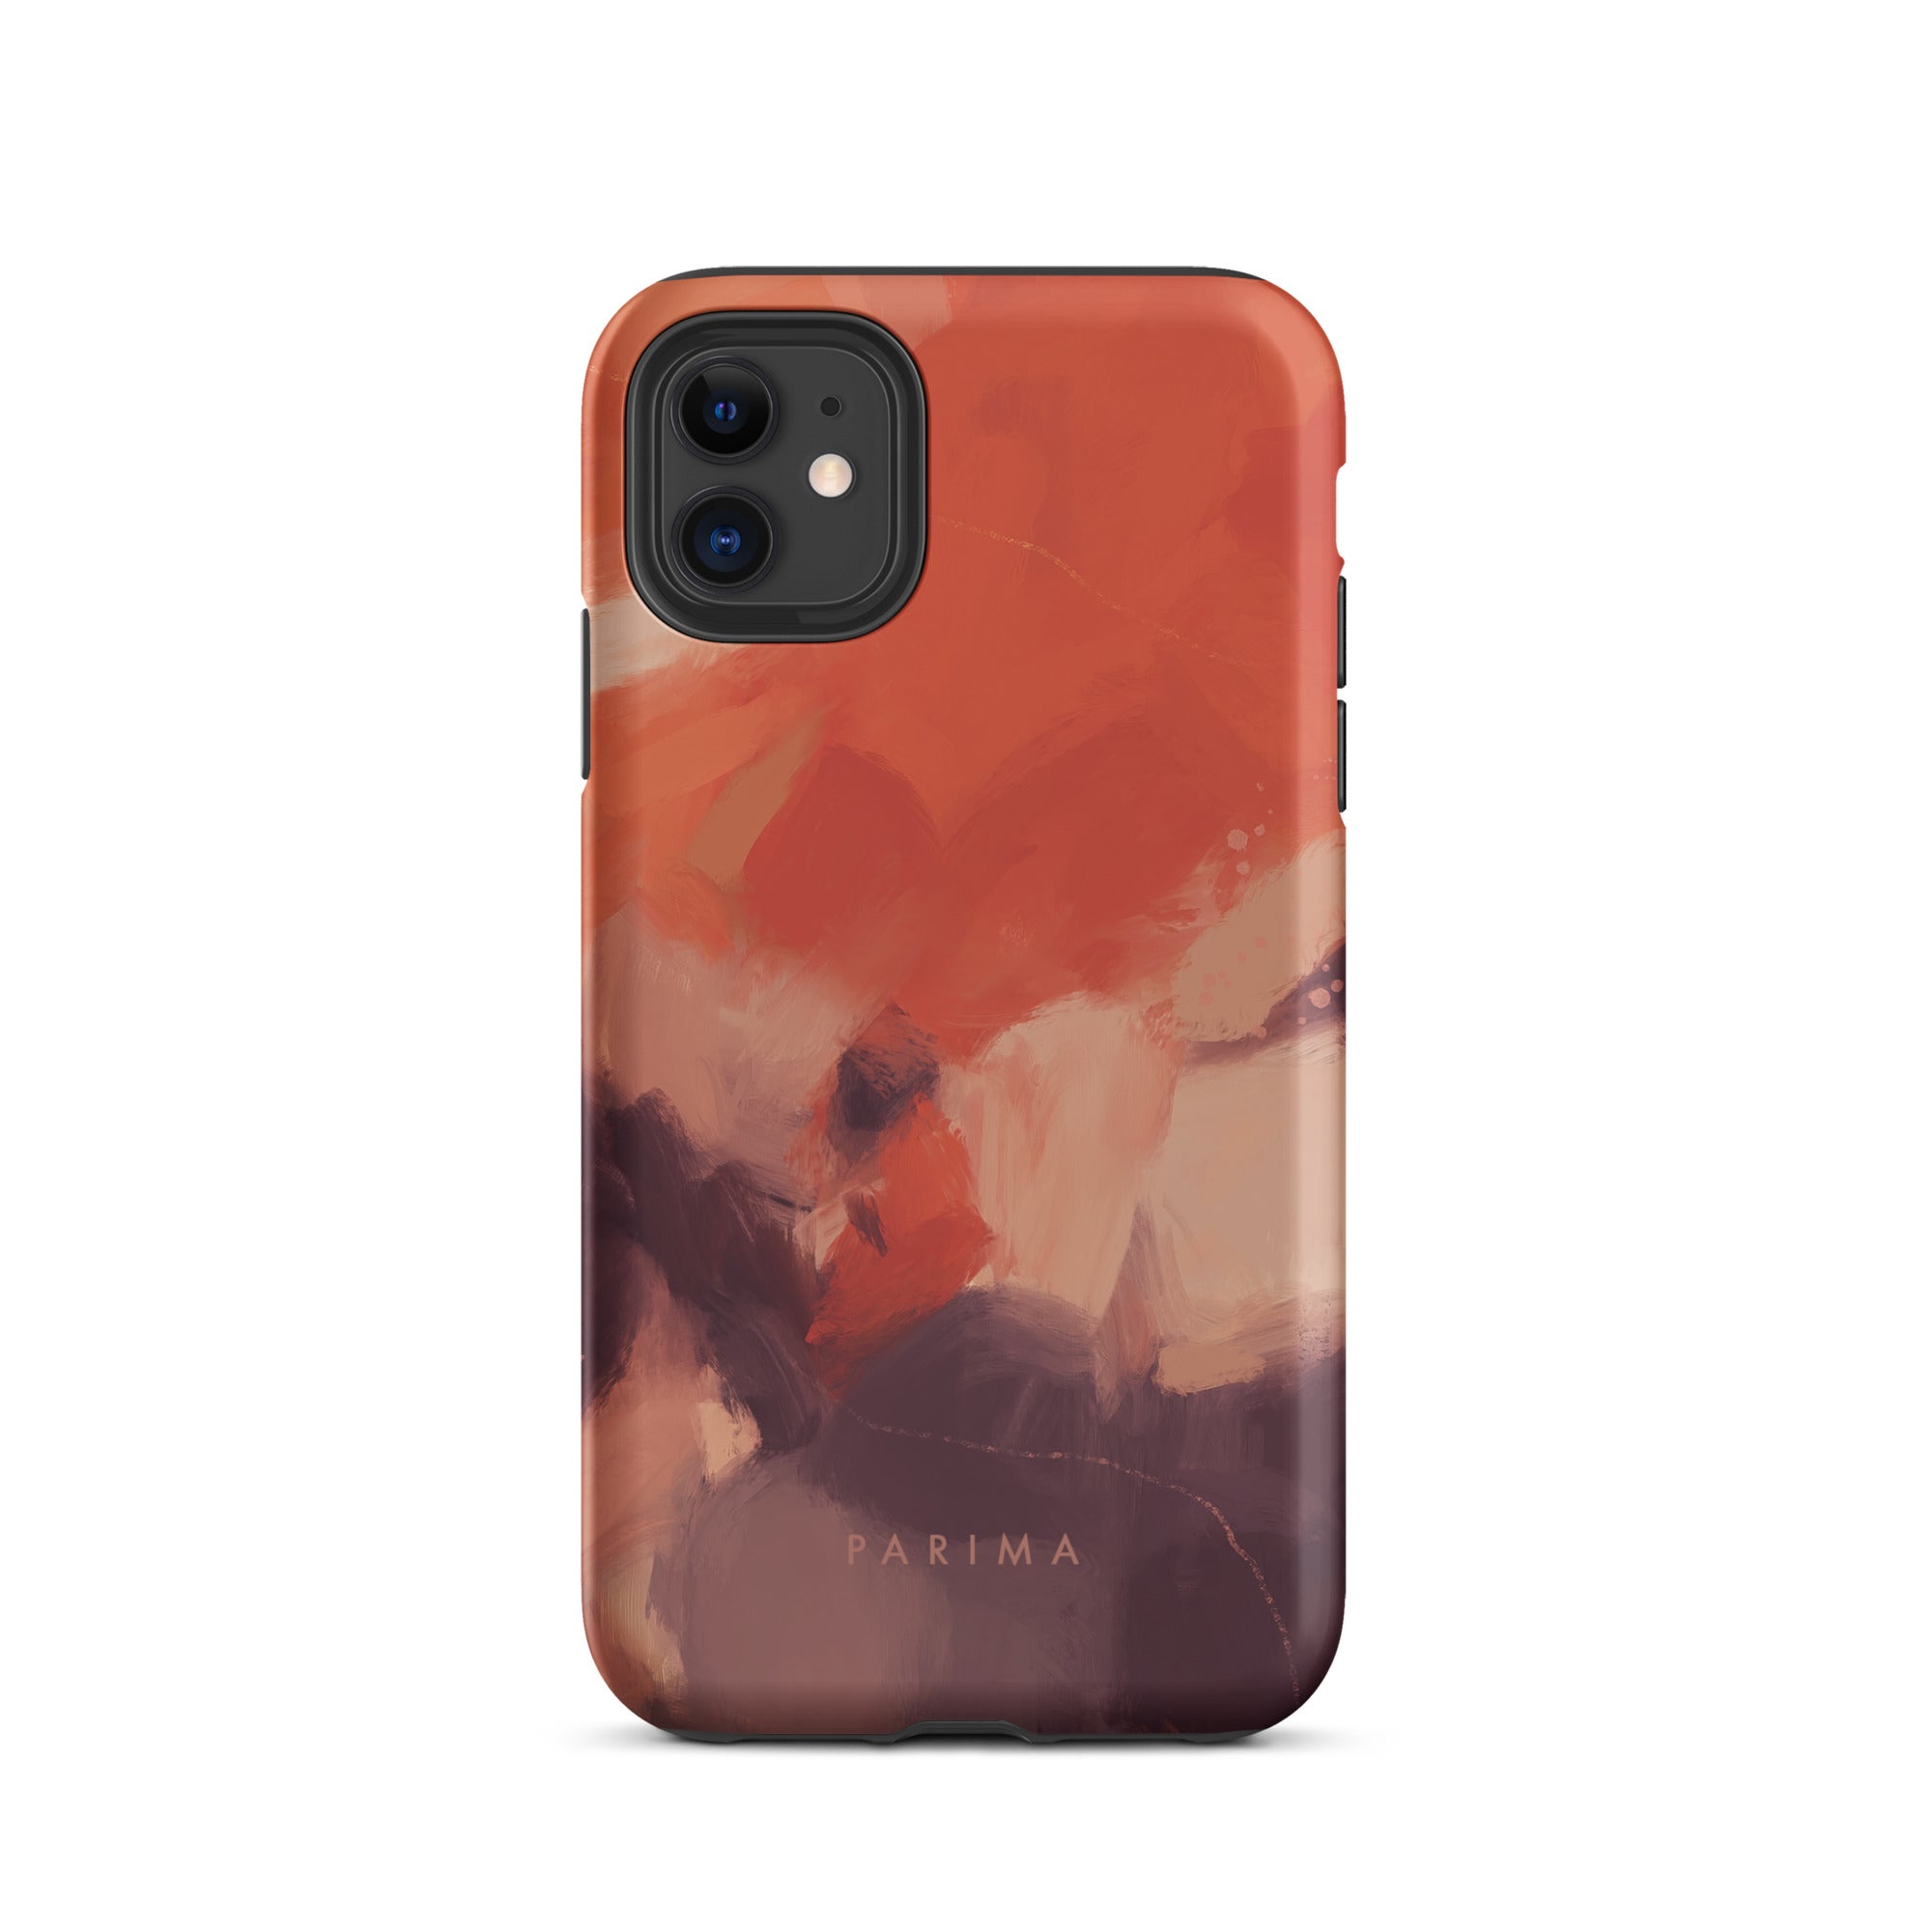 Autumn, orange and purple abstract art - iPhone 11 tough case by Parima Studio